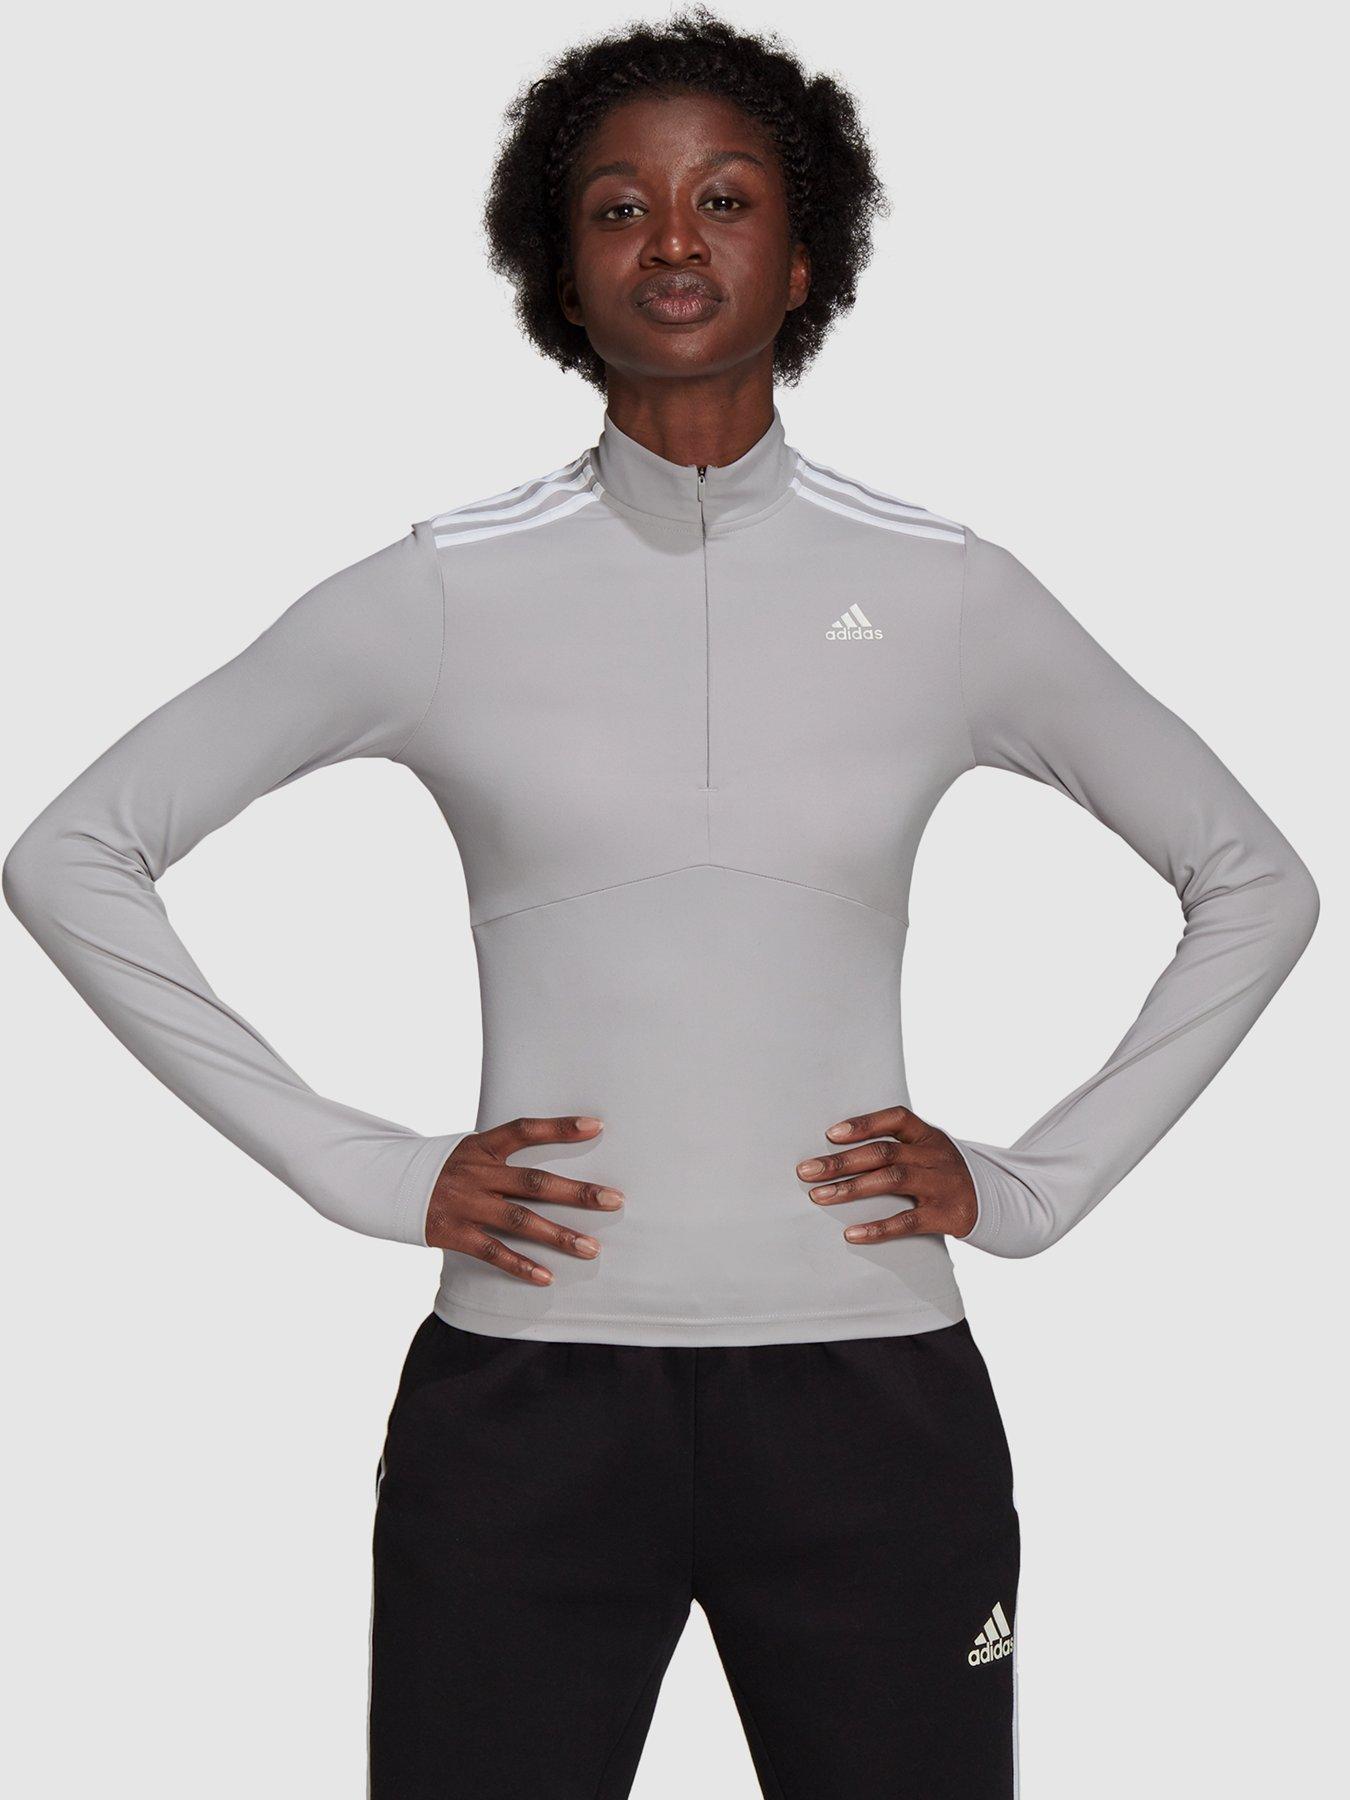 fremsætte Alternativ Daggry Long Sleeve | Adidas | Tops & t-shirts | Women | www.very.co.uk